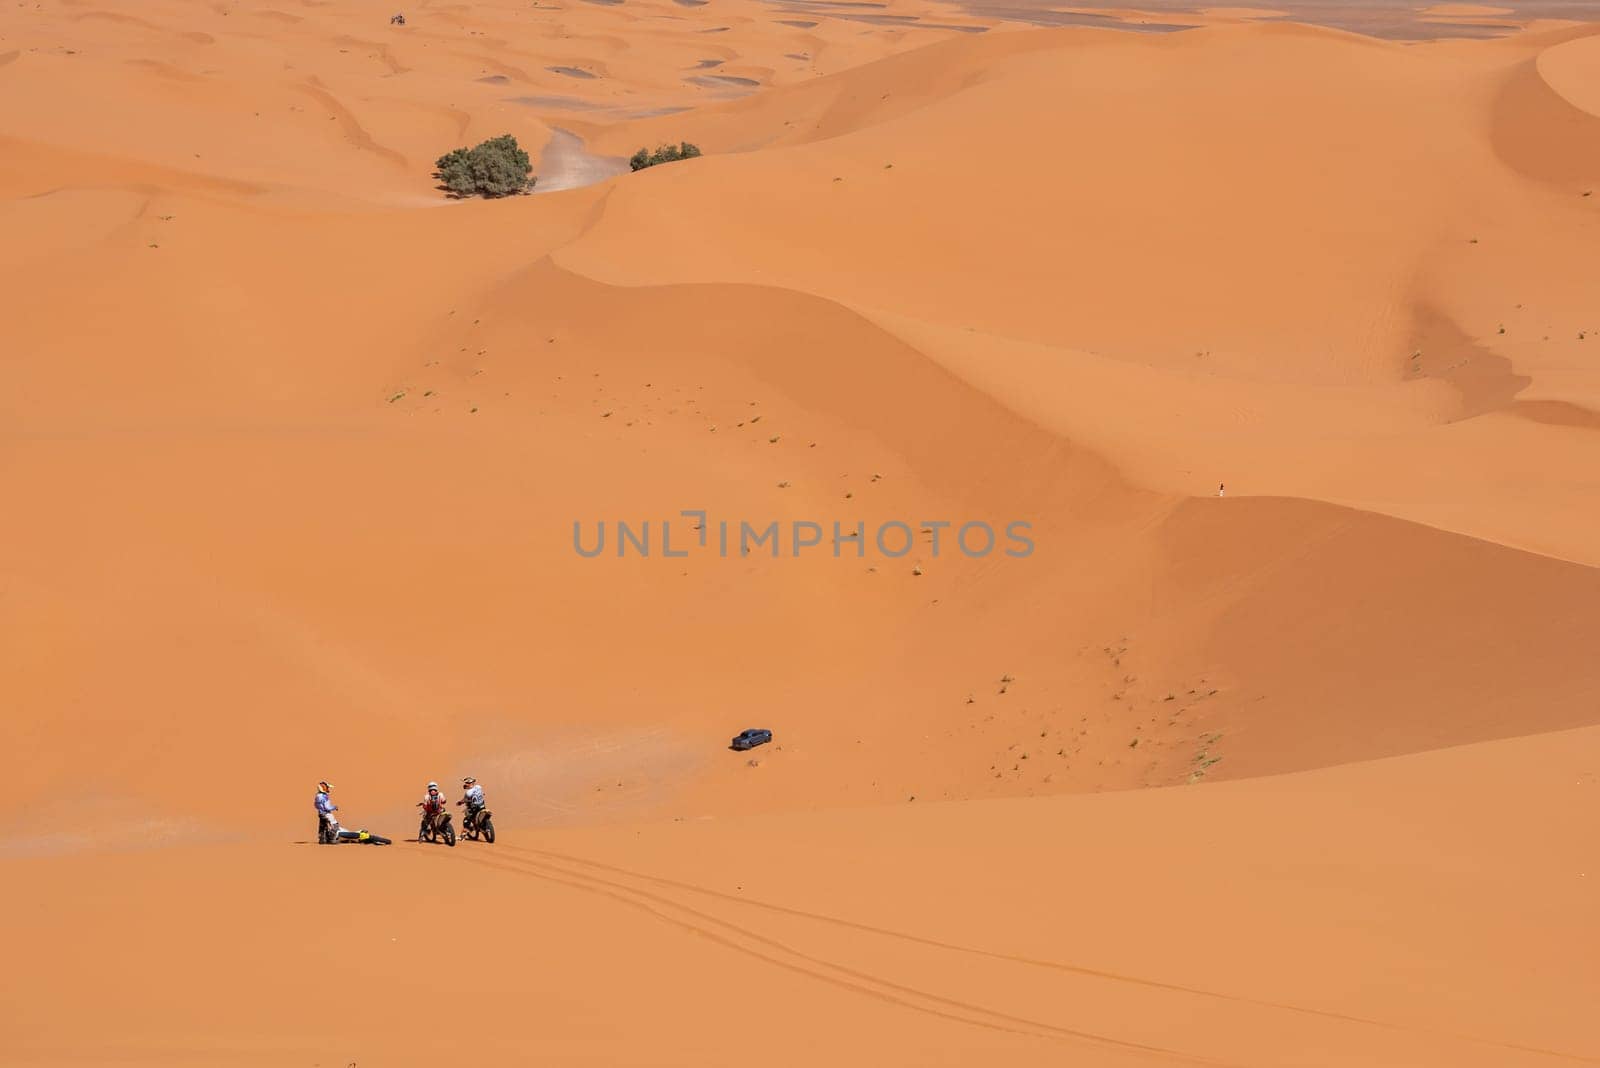 Motorbikers driving off-road in the Erg Chebbi desert near Merzouga, Morocco